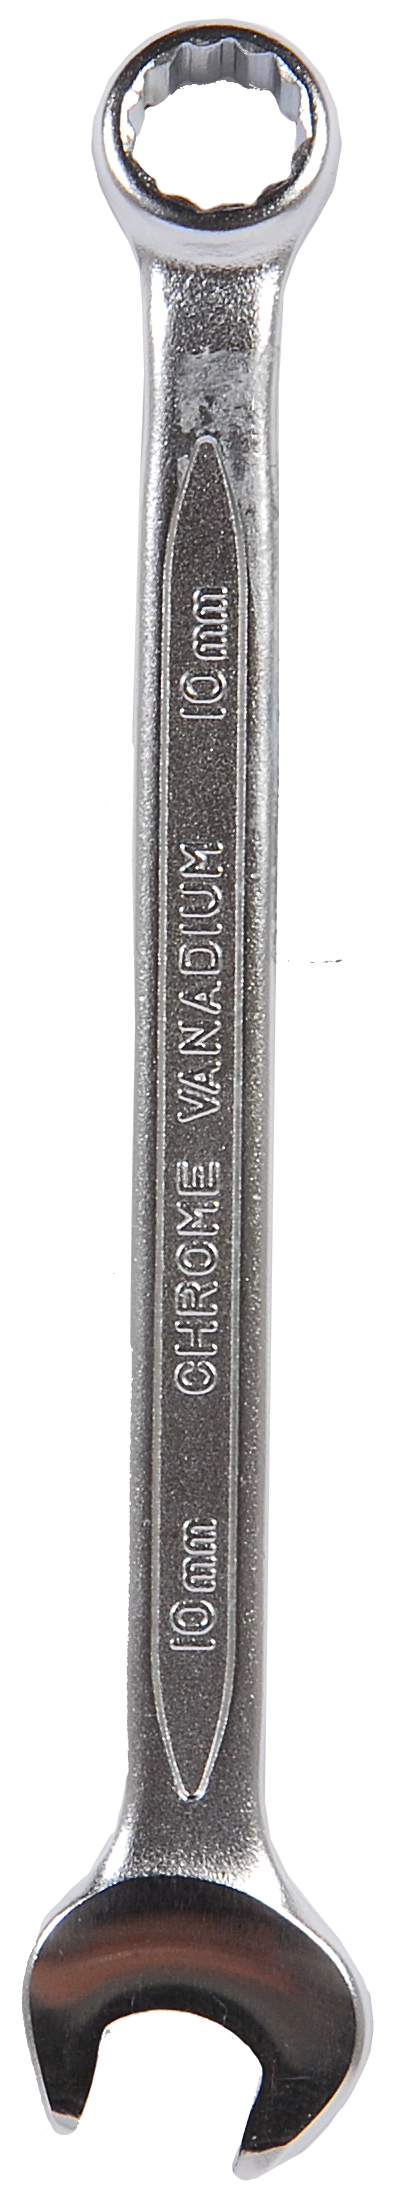 Stanley Slimline Combination Wrench 10mm